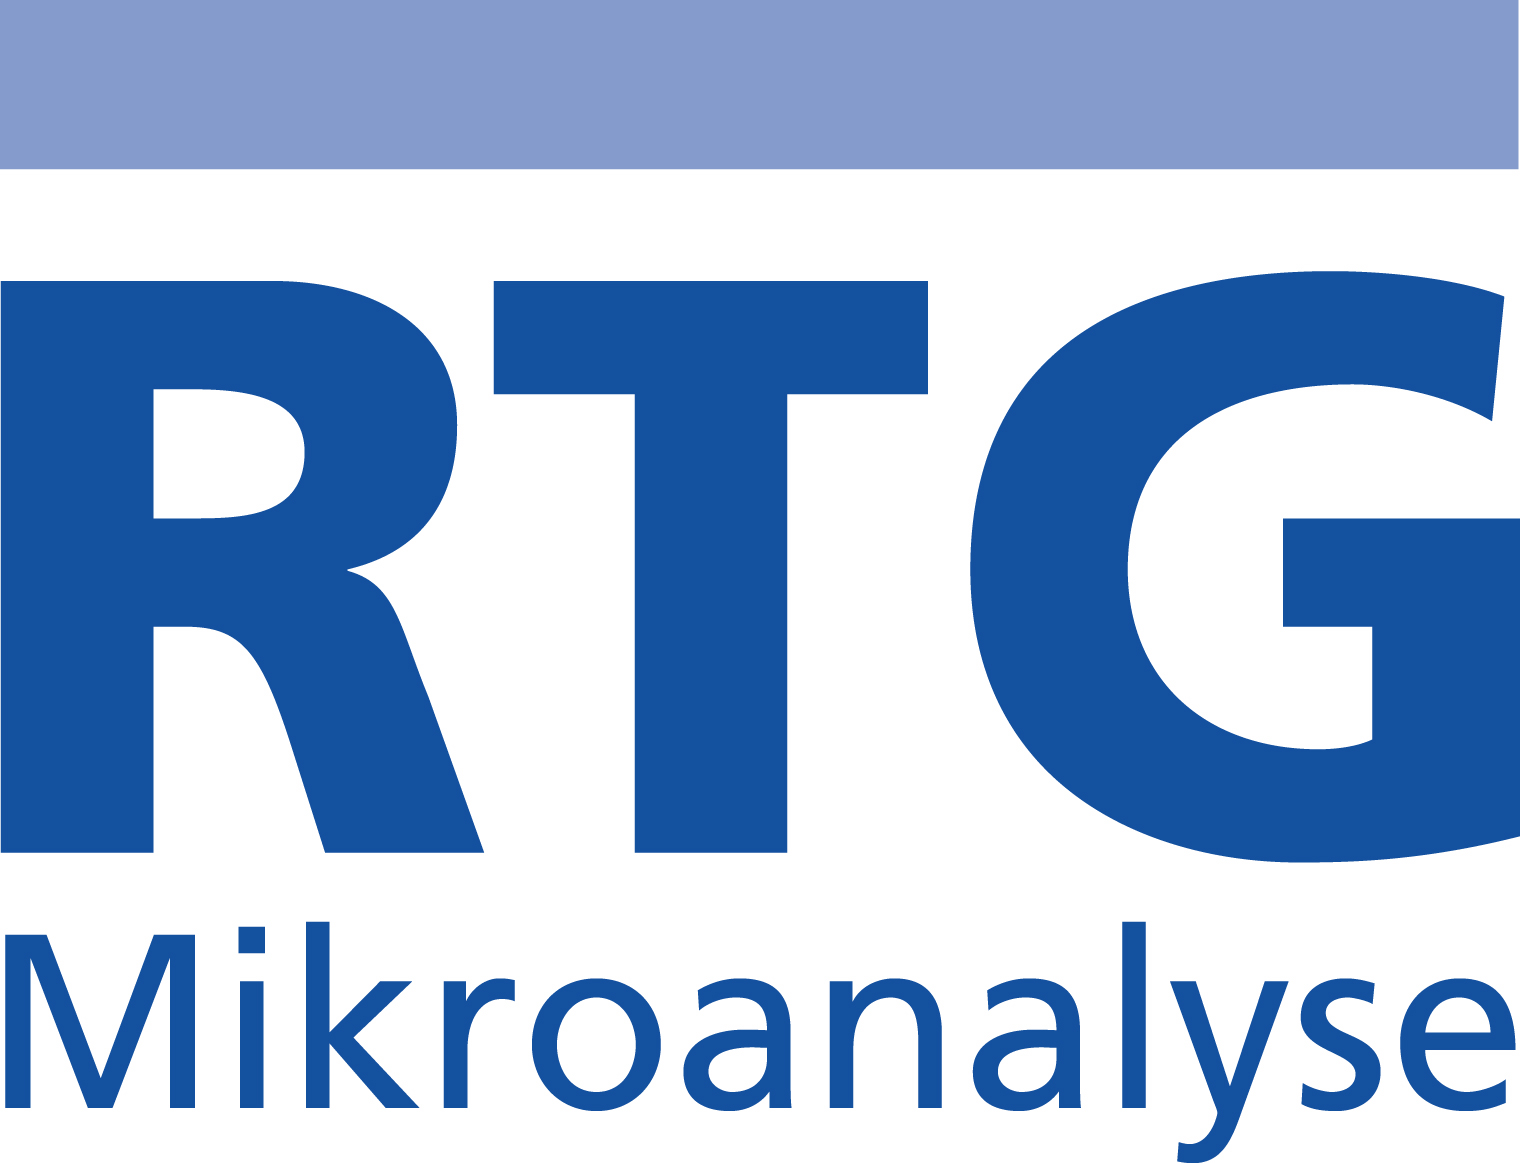 Logo of RTG Mikroanalyse GmbH